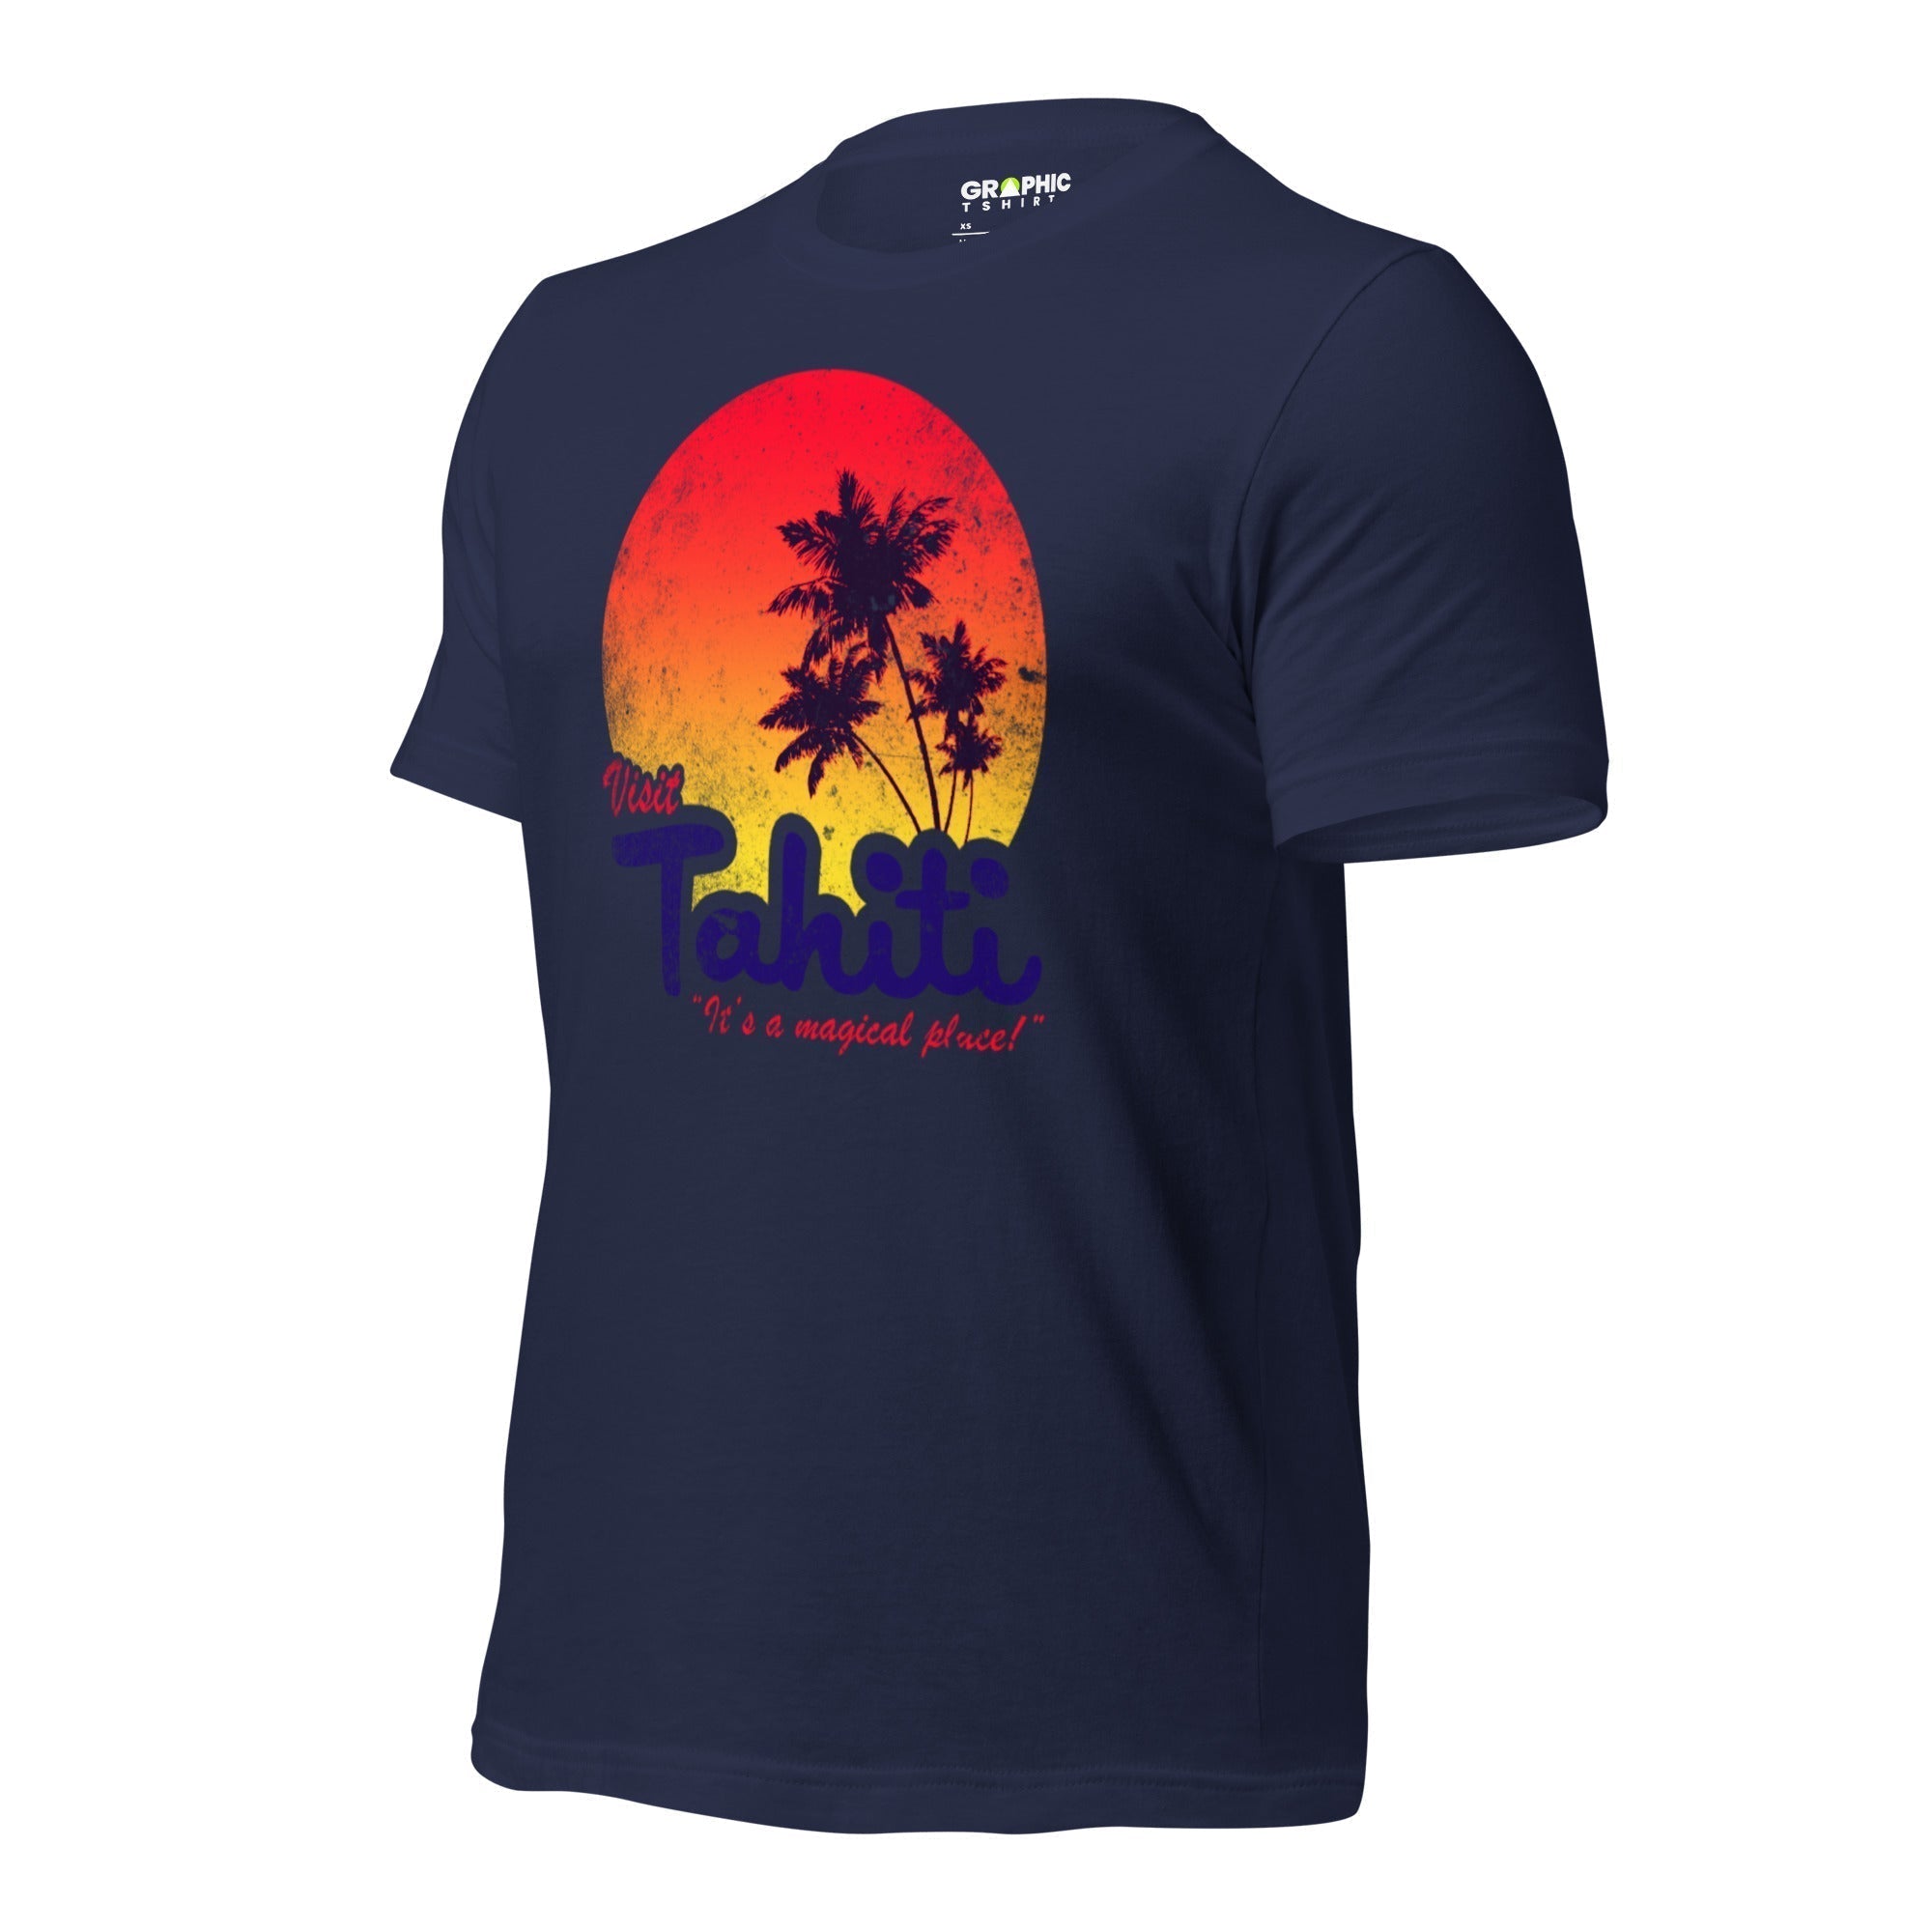 Unisex Staple T-Shirt - Visit Tahiti It's A Magical Place! - GRAPHIC T-SHIRTS